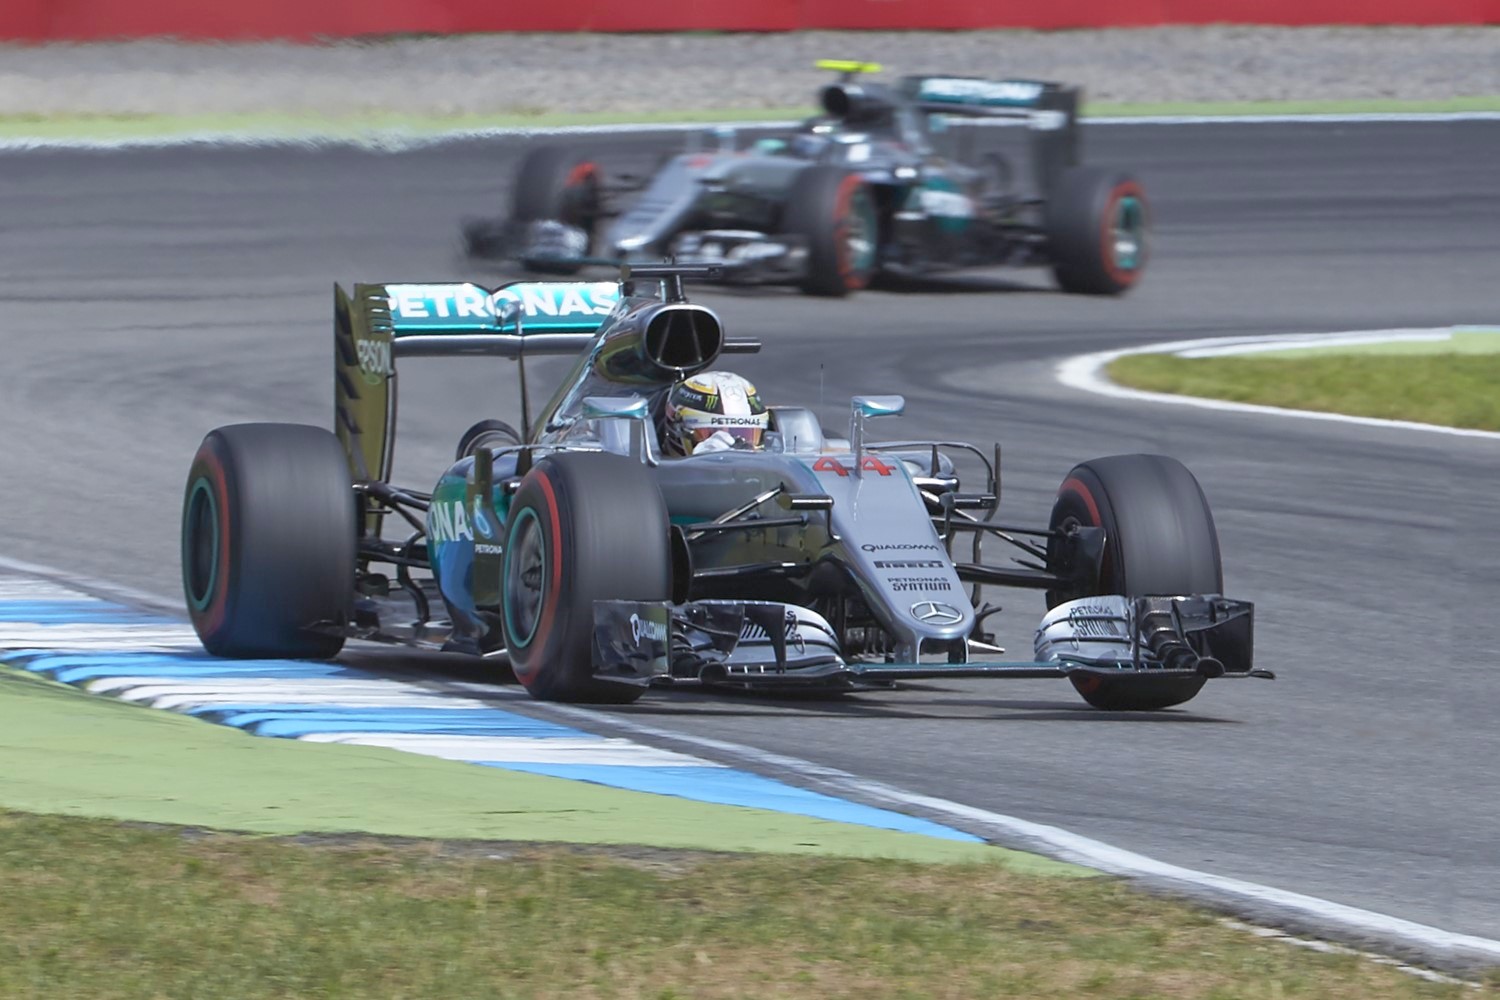 Rosberg trails Hamilton in the 2016 German GP